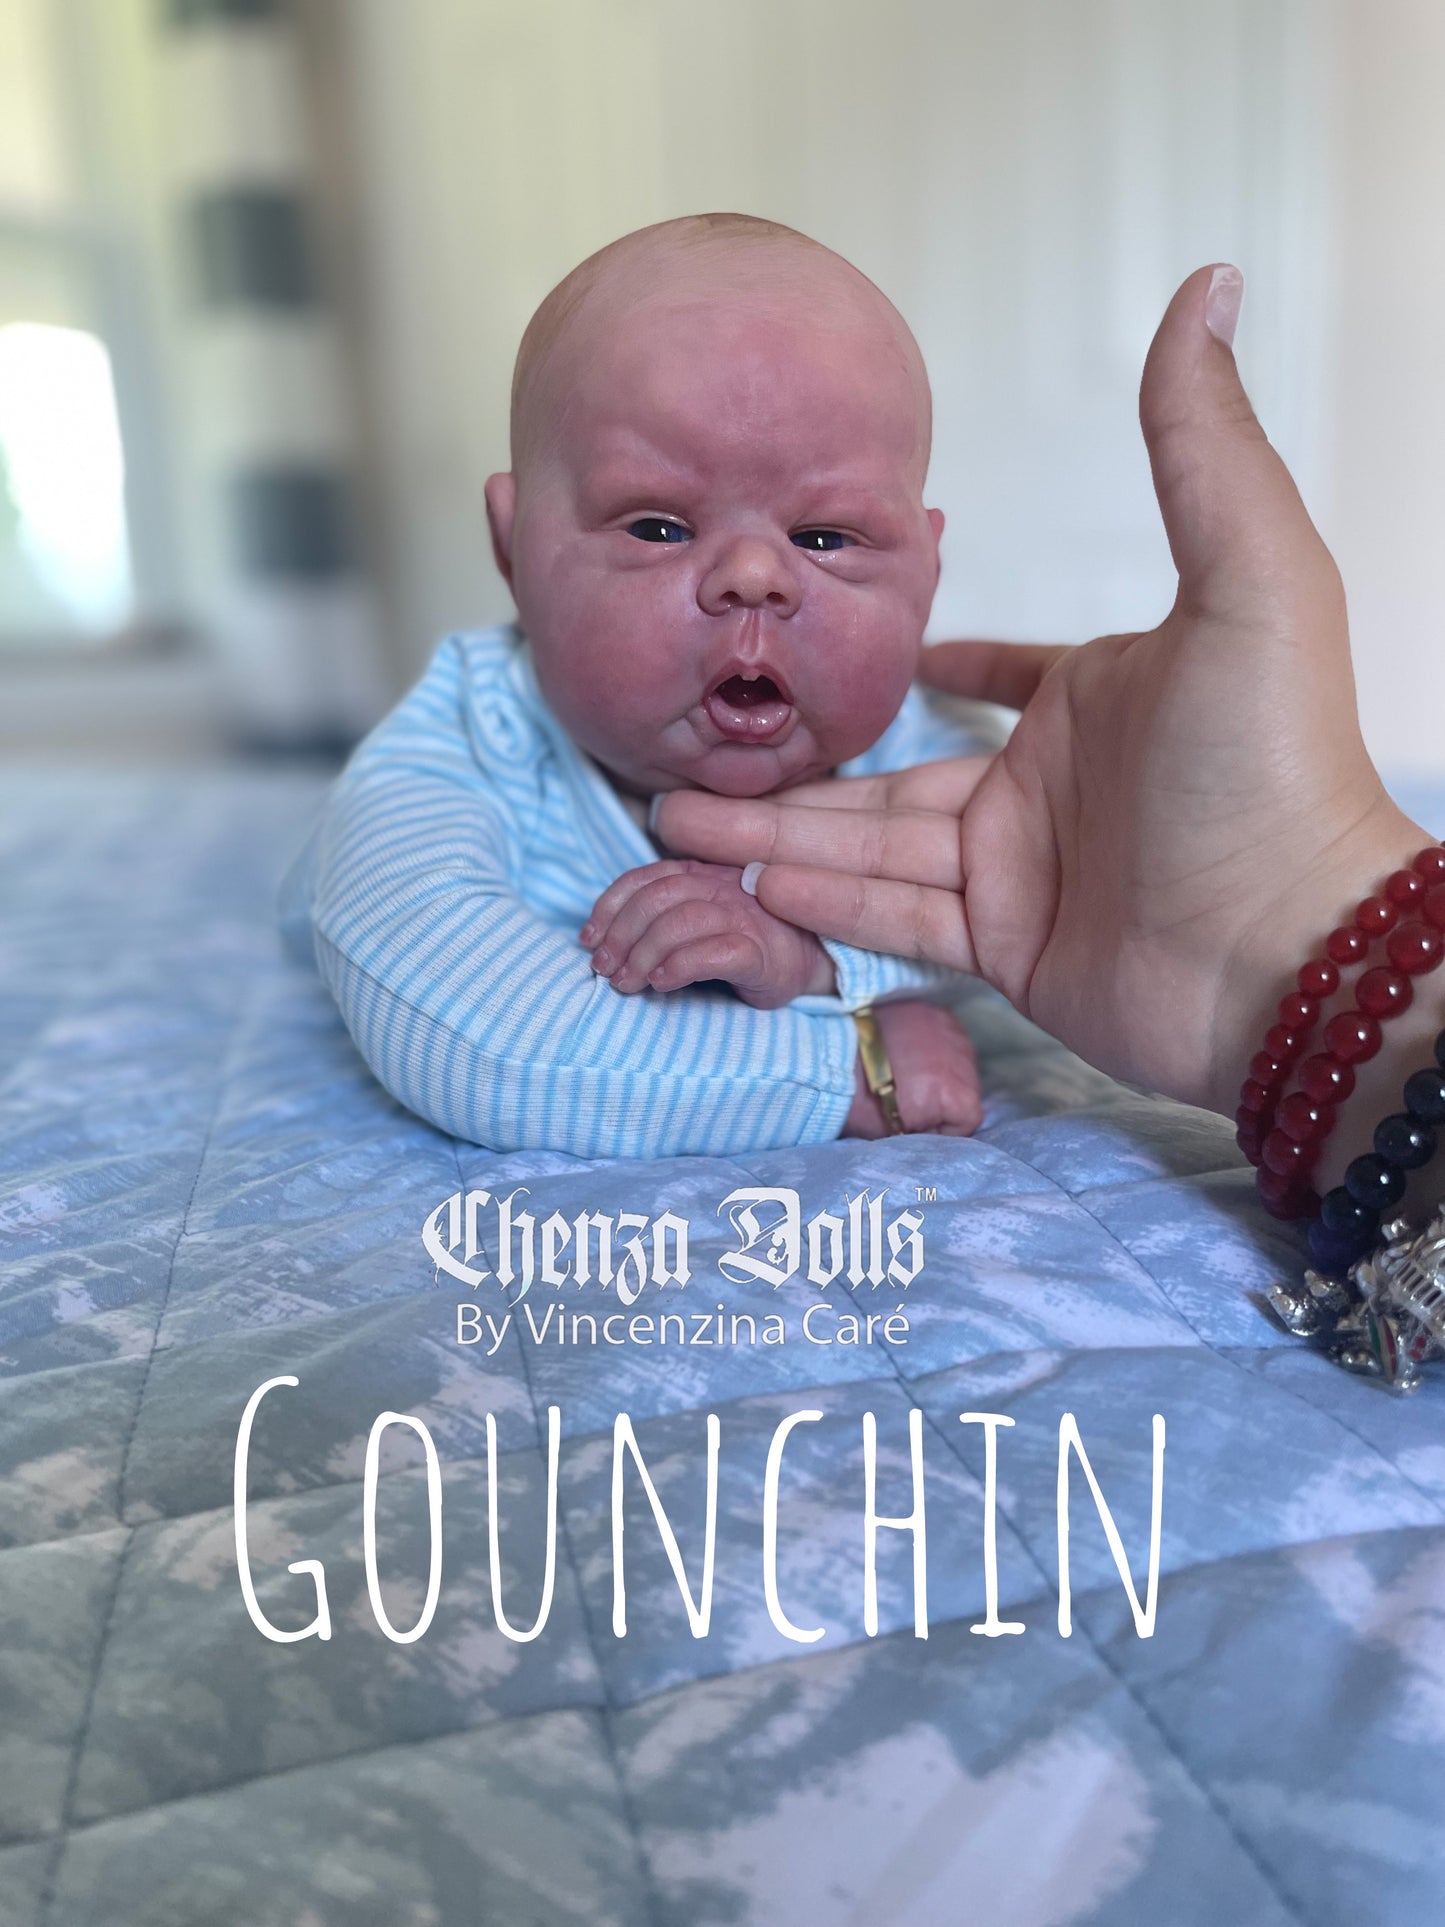 First edition Gounchin!